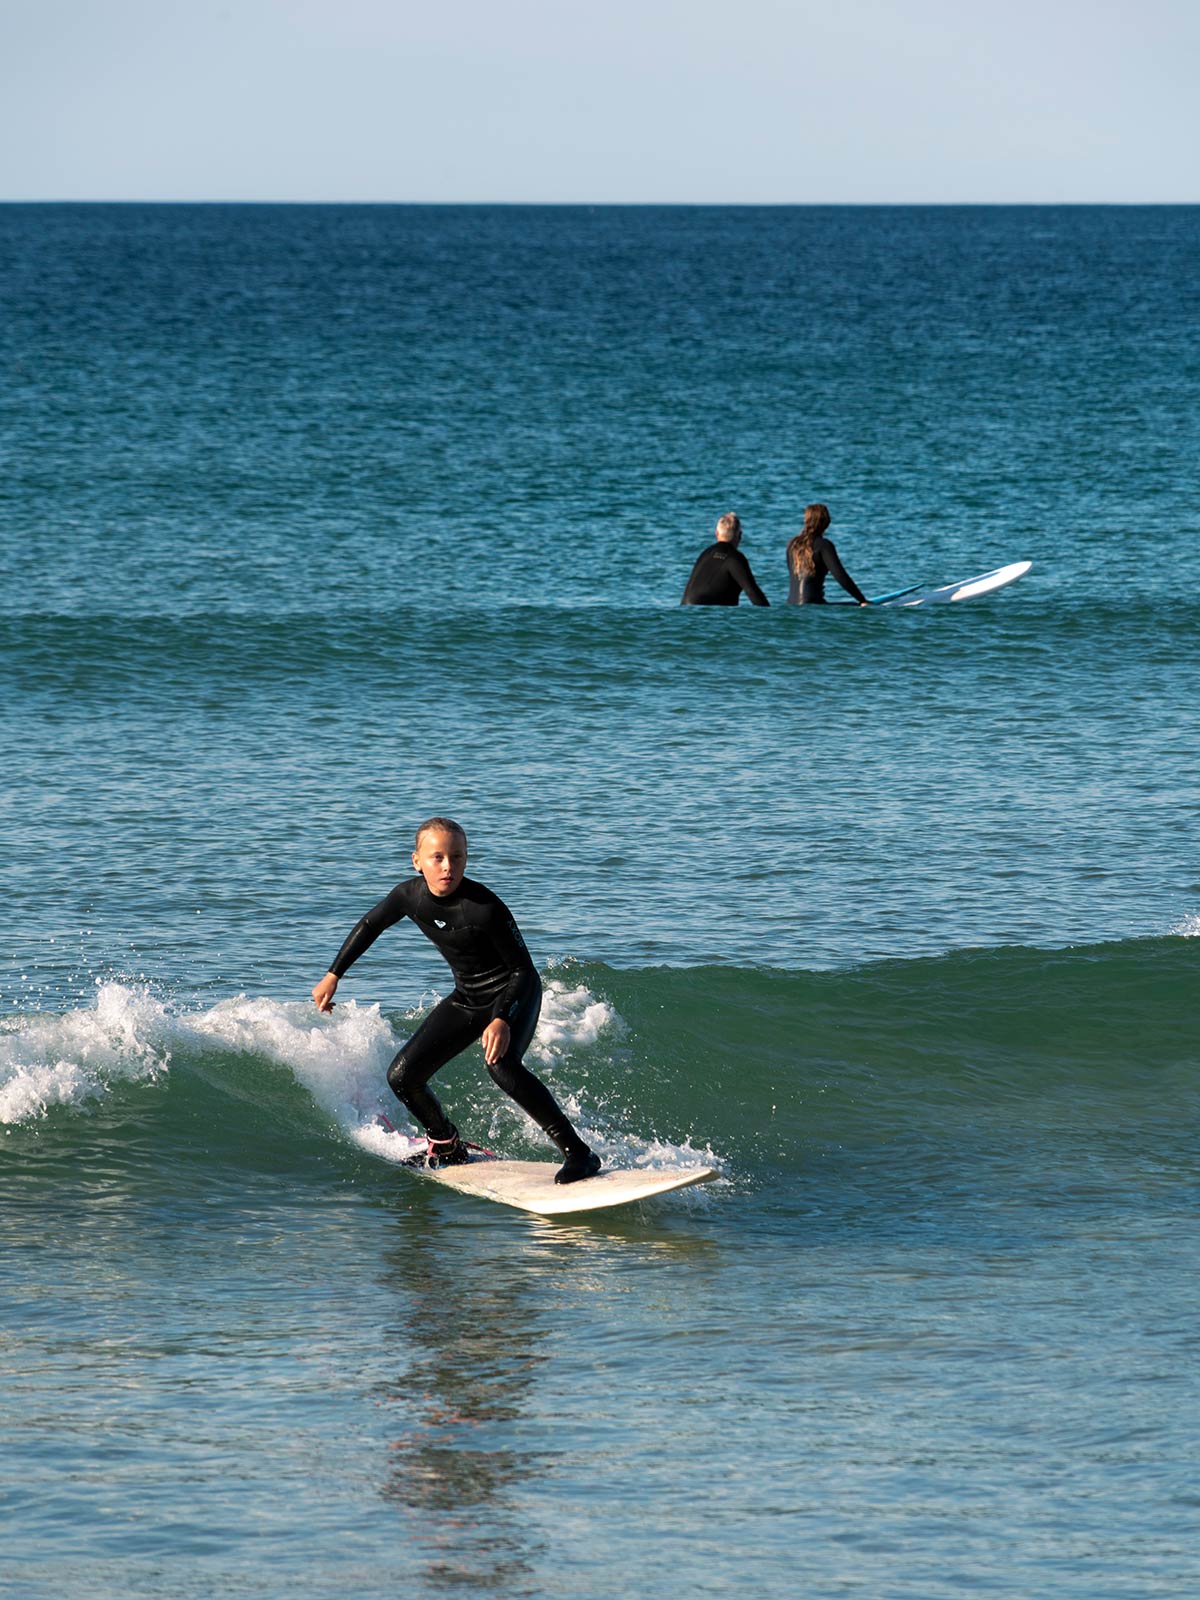 Plage de Porthmeor, surfeur, Saint Ives, Cornouailles, Angleterre / Porthmeor Beach, surf, St Ives, Cornwall, England, UK